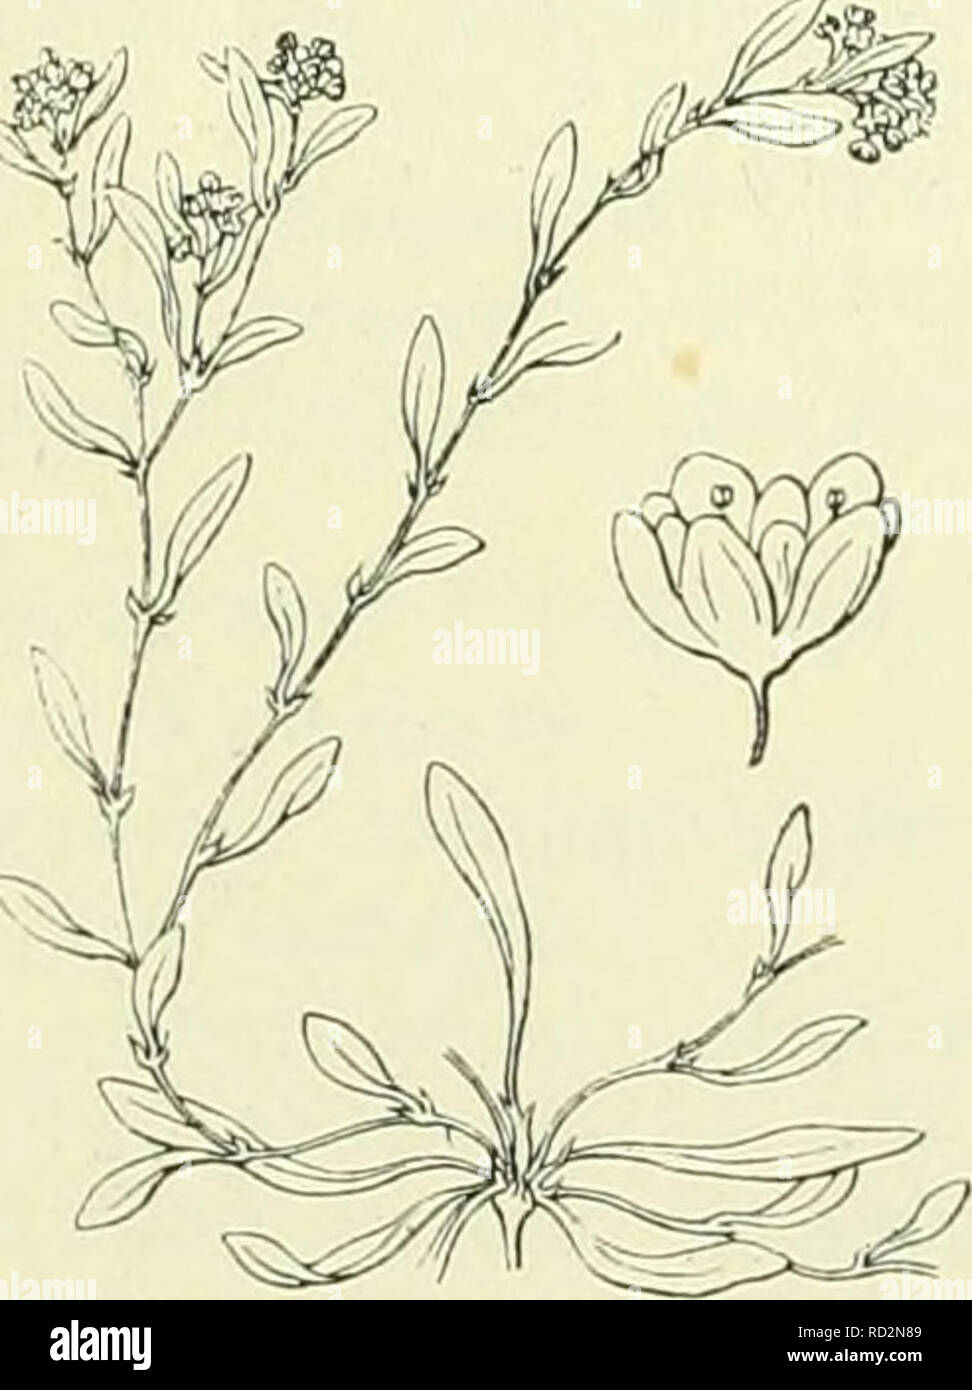 . De flora van Nederland. Plants. 124 — CARYOPHYLLACEAE. FAMILIE 32. Silene Otites, S. vulgaris, S. nutans, Tunica prolifera, Herniaria, Scleranthus perennis en Spergula. 6°. ruderalplanten en akkeronkruiden b.v. Stellaria media en S. graminea, Cerastium arvense, Gypsophila muralis, Spergularia rubra en S. segetalis, Alsine tenuifolia, Silene noctiflorum, S. dichotoma, S. conica en S. gallica, Agrostemma Githago, Scleranthus annuus, Arenaria serpyllifolia en Vaccaria parvifiora. Onderfamilie 1. Paronychioideae A. Br. Bladen verspreid of tegenoverstaand, met droogvliezige steunblaadjes. Bloemen Stock Photo